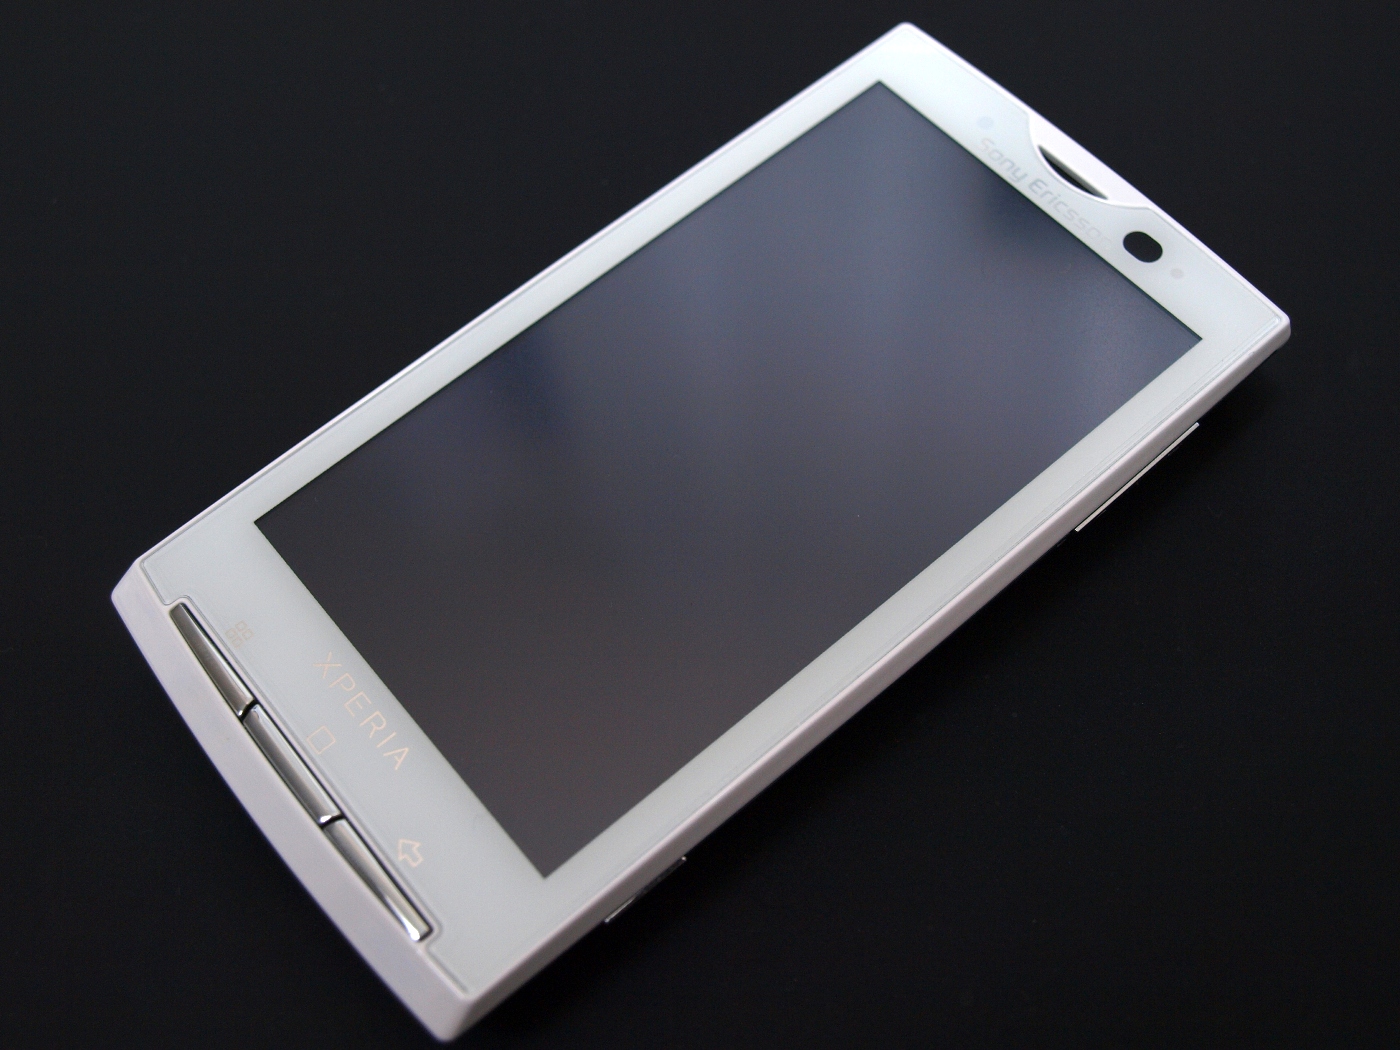 Sony Ericsson Xperia X10 - Wikipedia